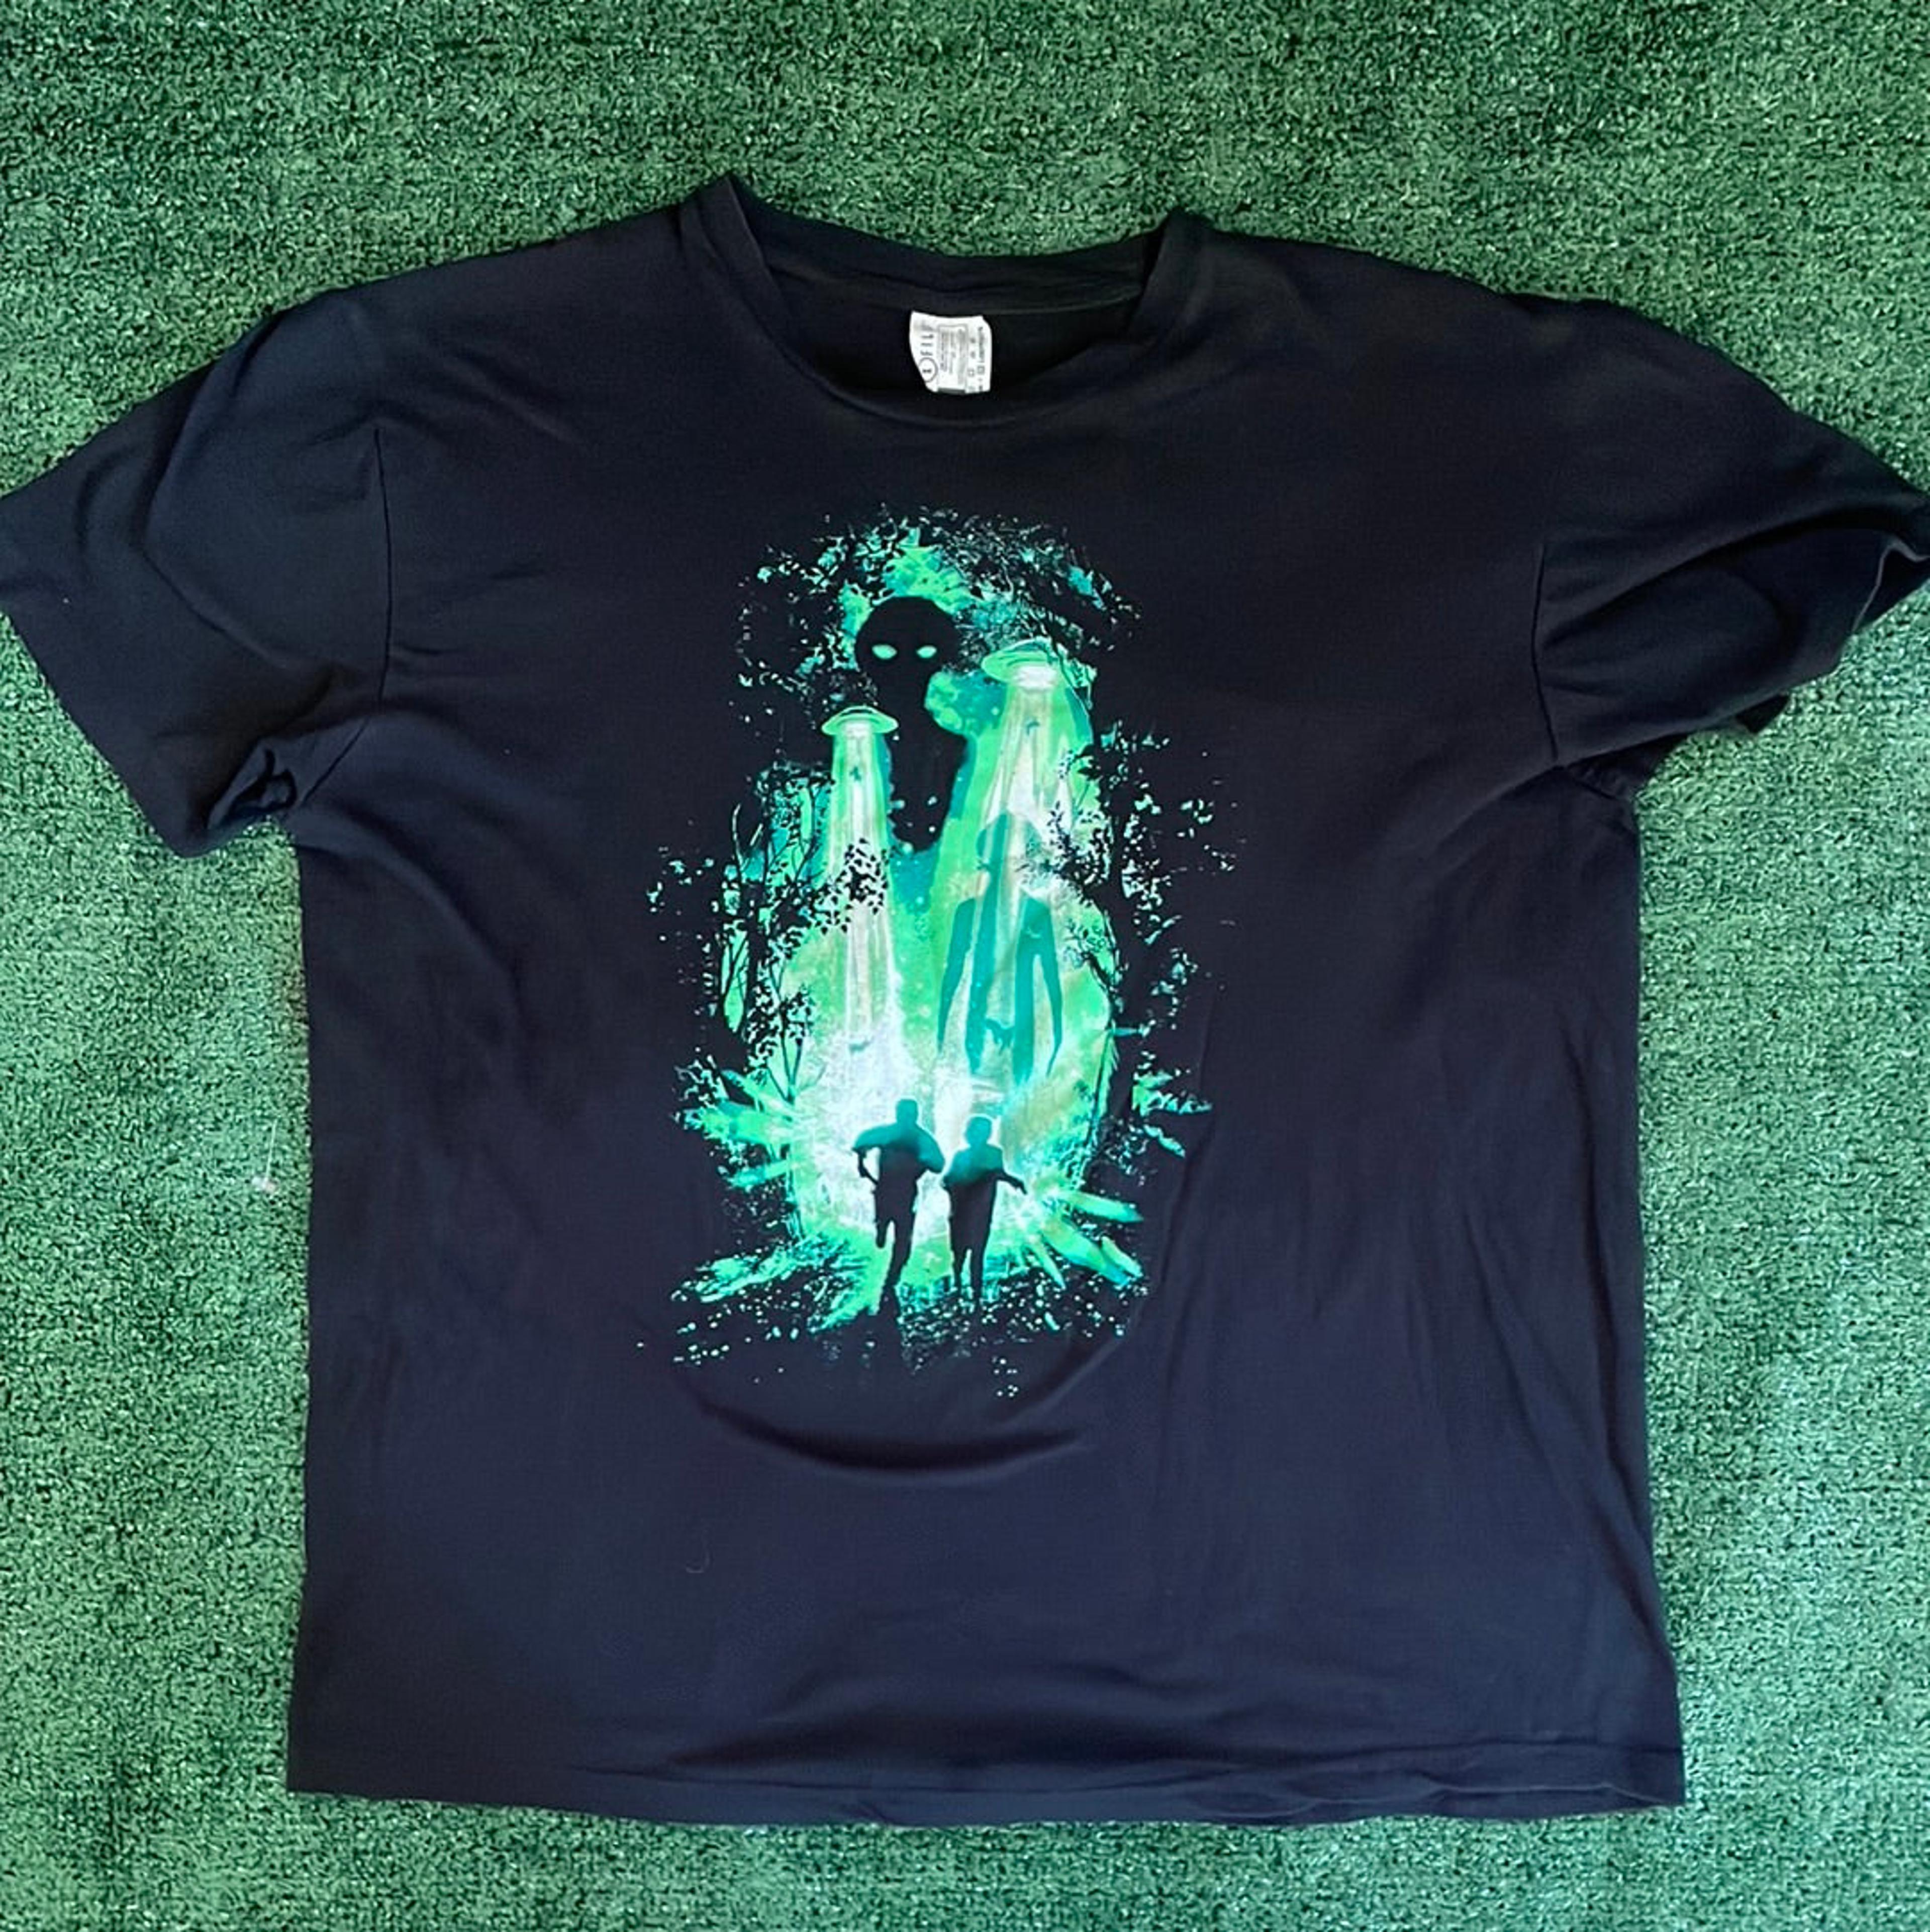 X Files Shirt